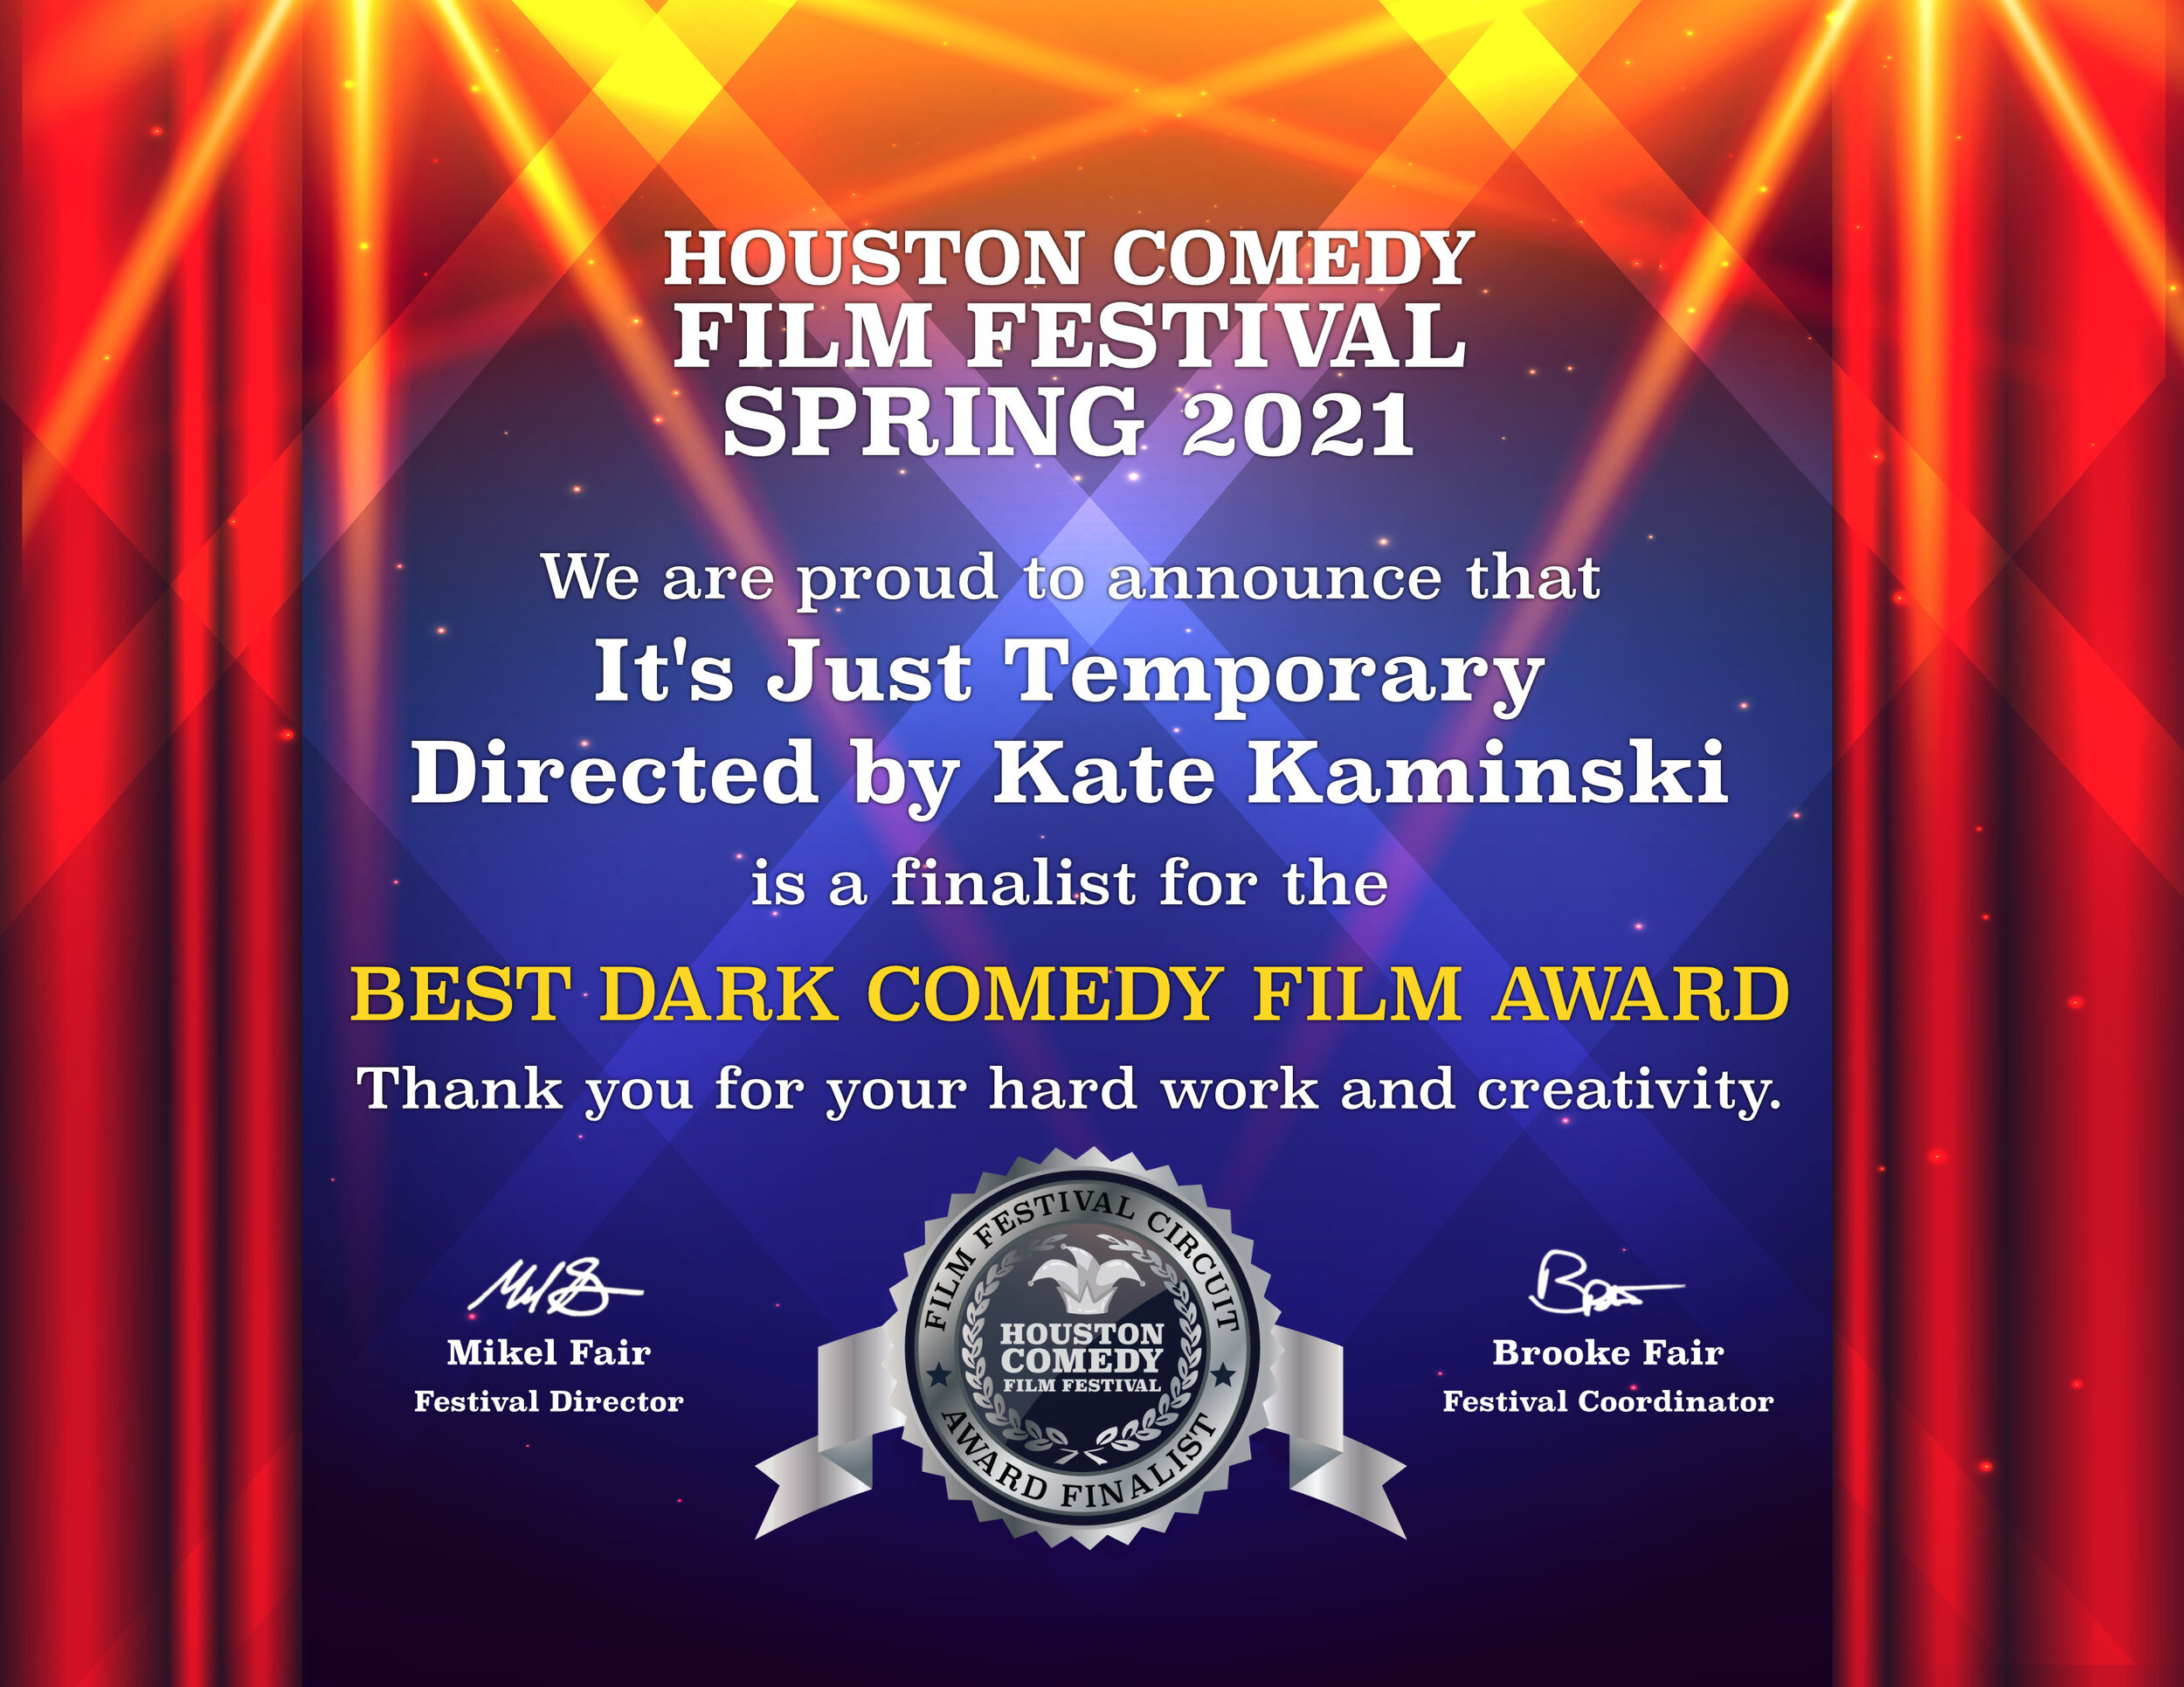 Houston Comedy Film Festival Spring 2021-Best Dark Comedy Film Award Finalist-It's Just Temporary.jpg